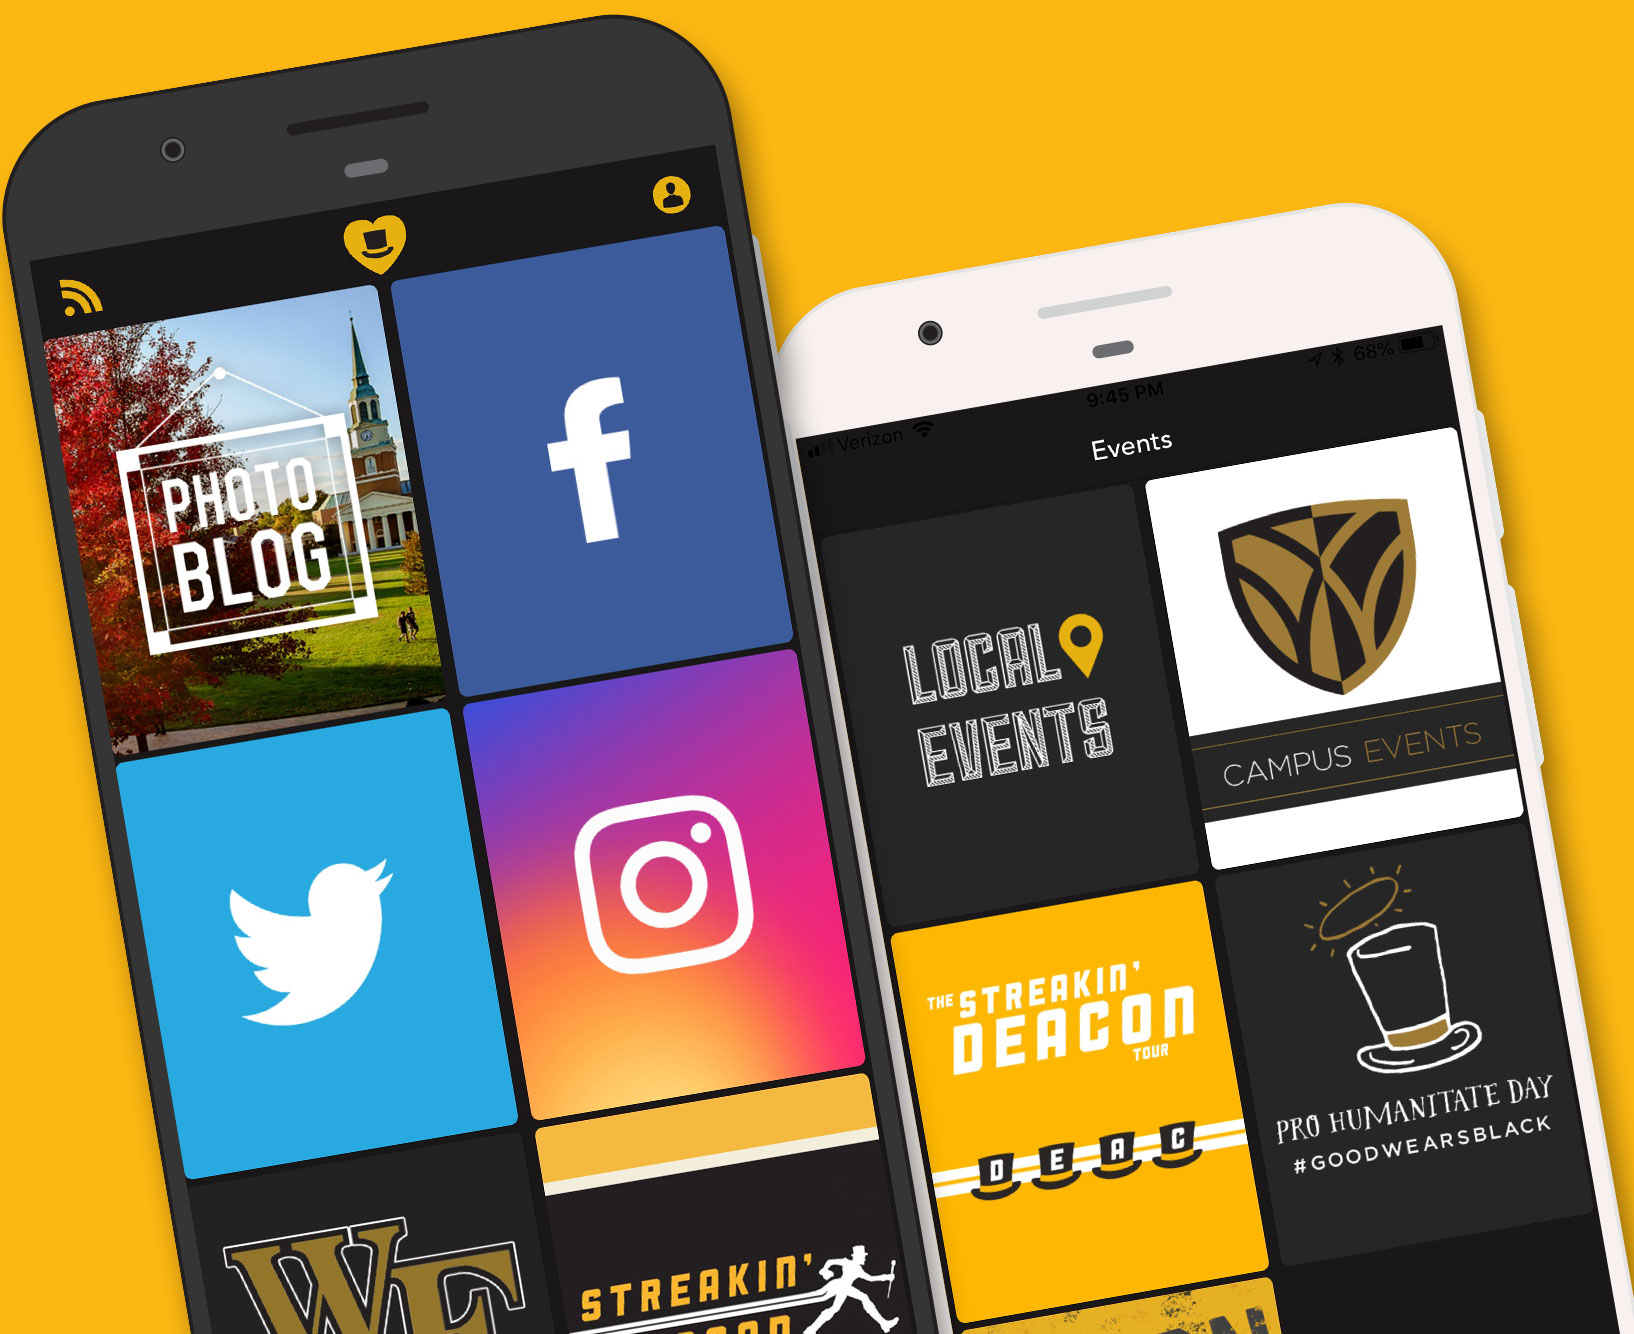 Wake Forest University Mobile app